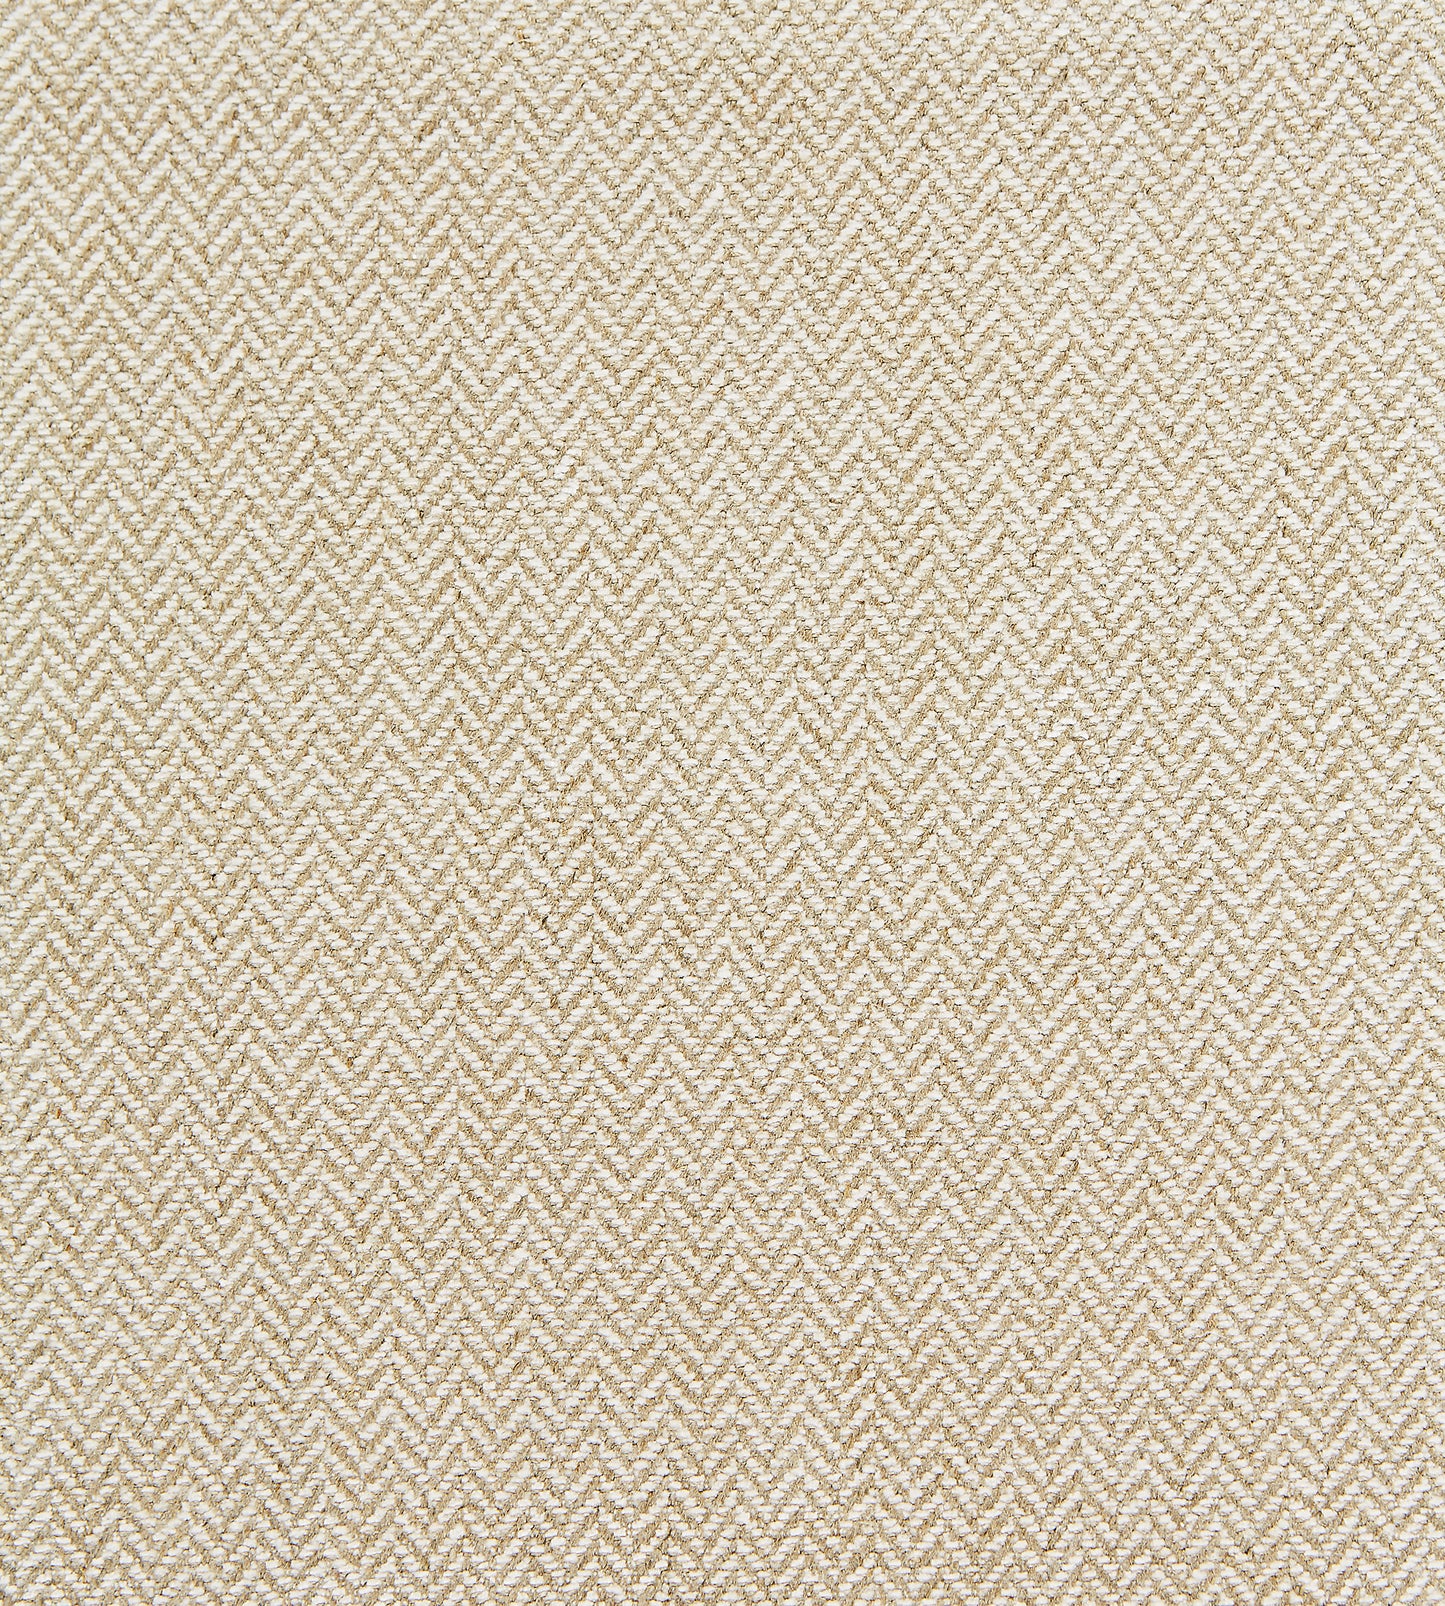 Purchase Scalamandre Fabric Item# SC 000127006, Oxford Herringbone Weave Flax 1